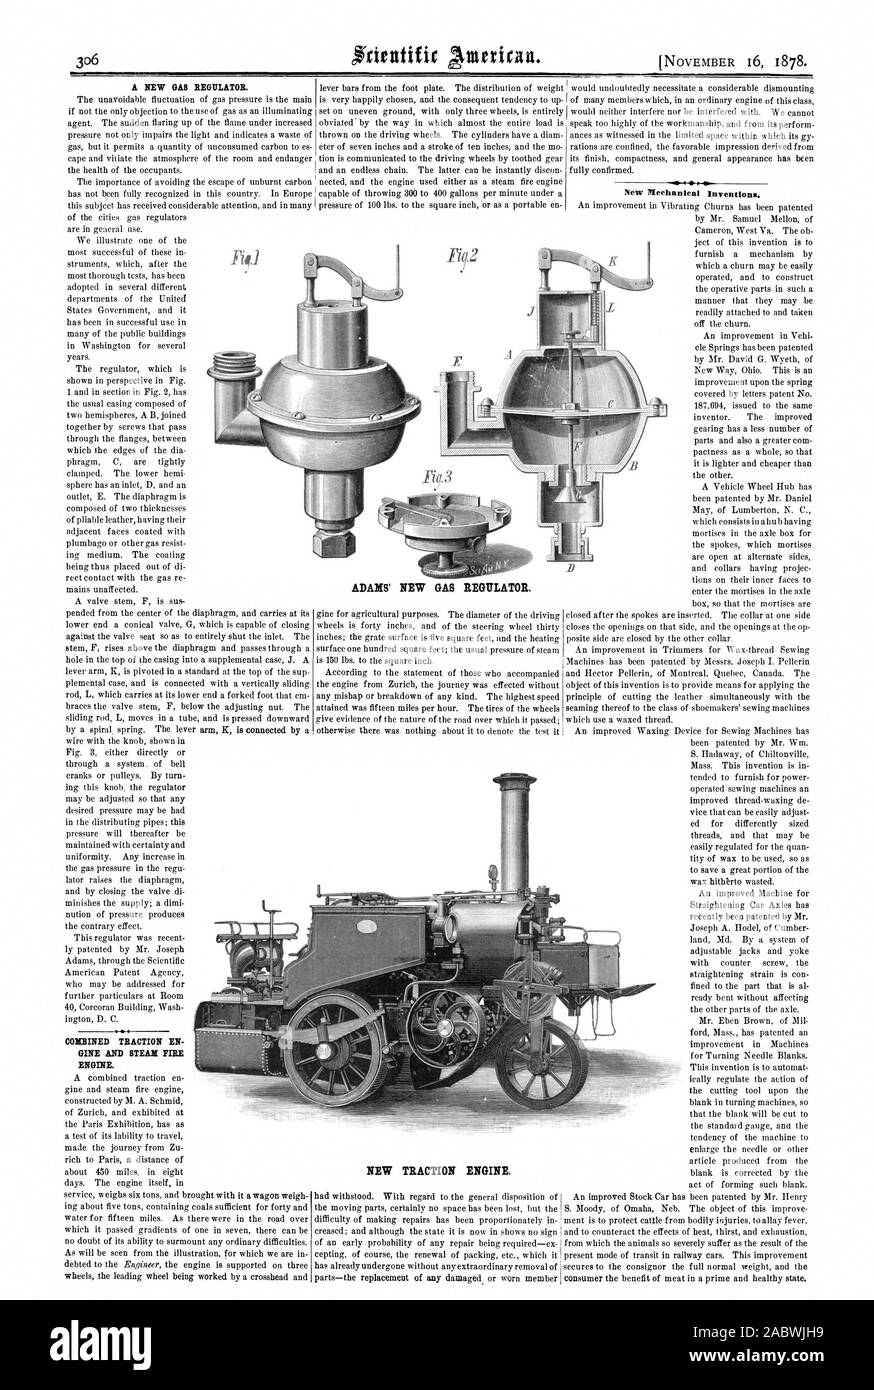 ADAMS' NEW GAS REGULATOR. NEW TRACTION ENGINE., scientific american, 1878-11-16 Stock Photo